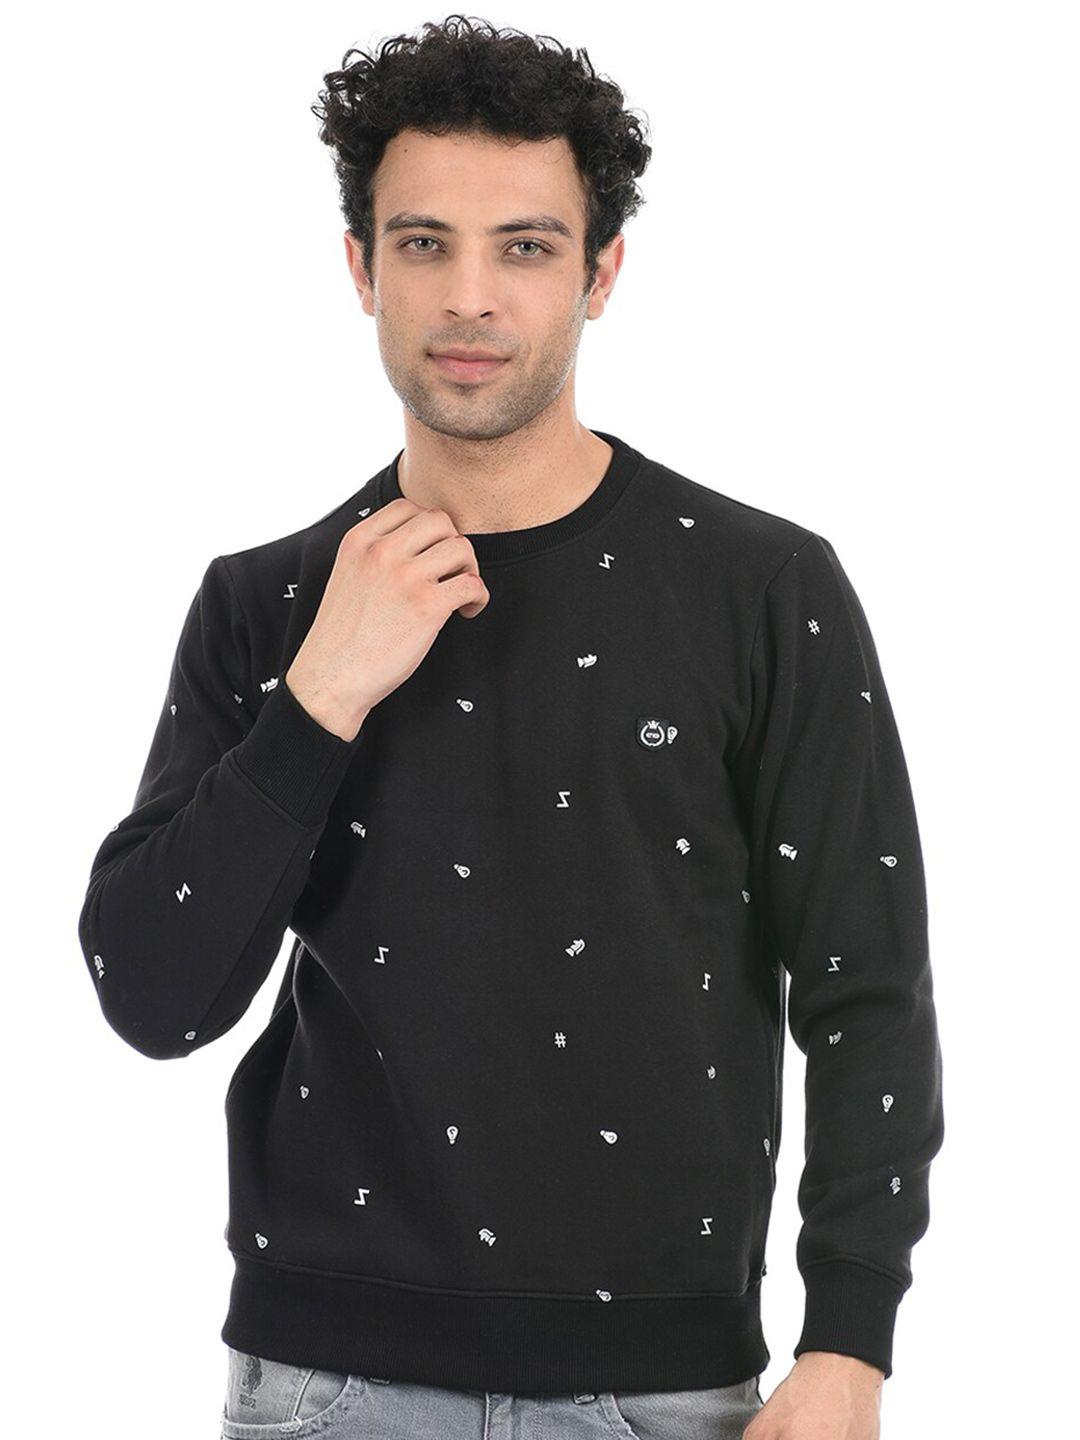 cloak & decker by monte carlo men black printed cotton sweatshirt